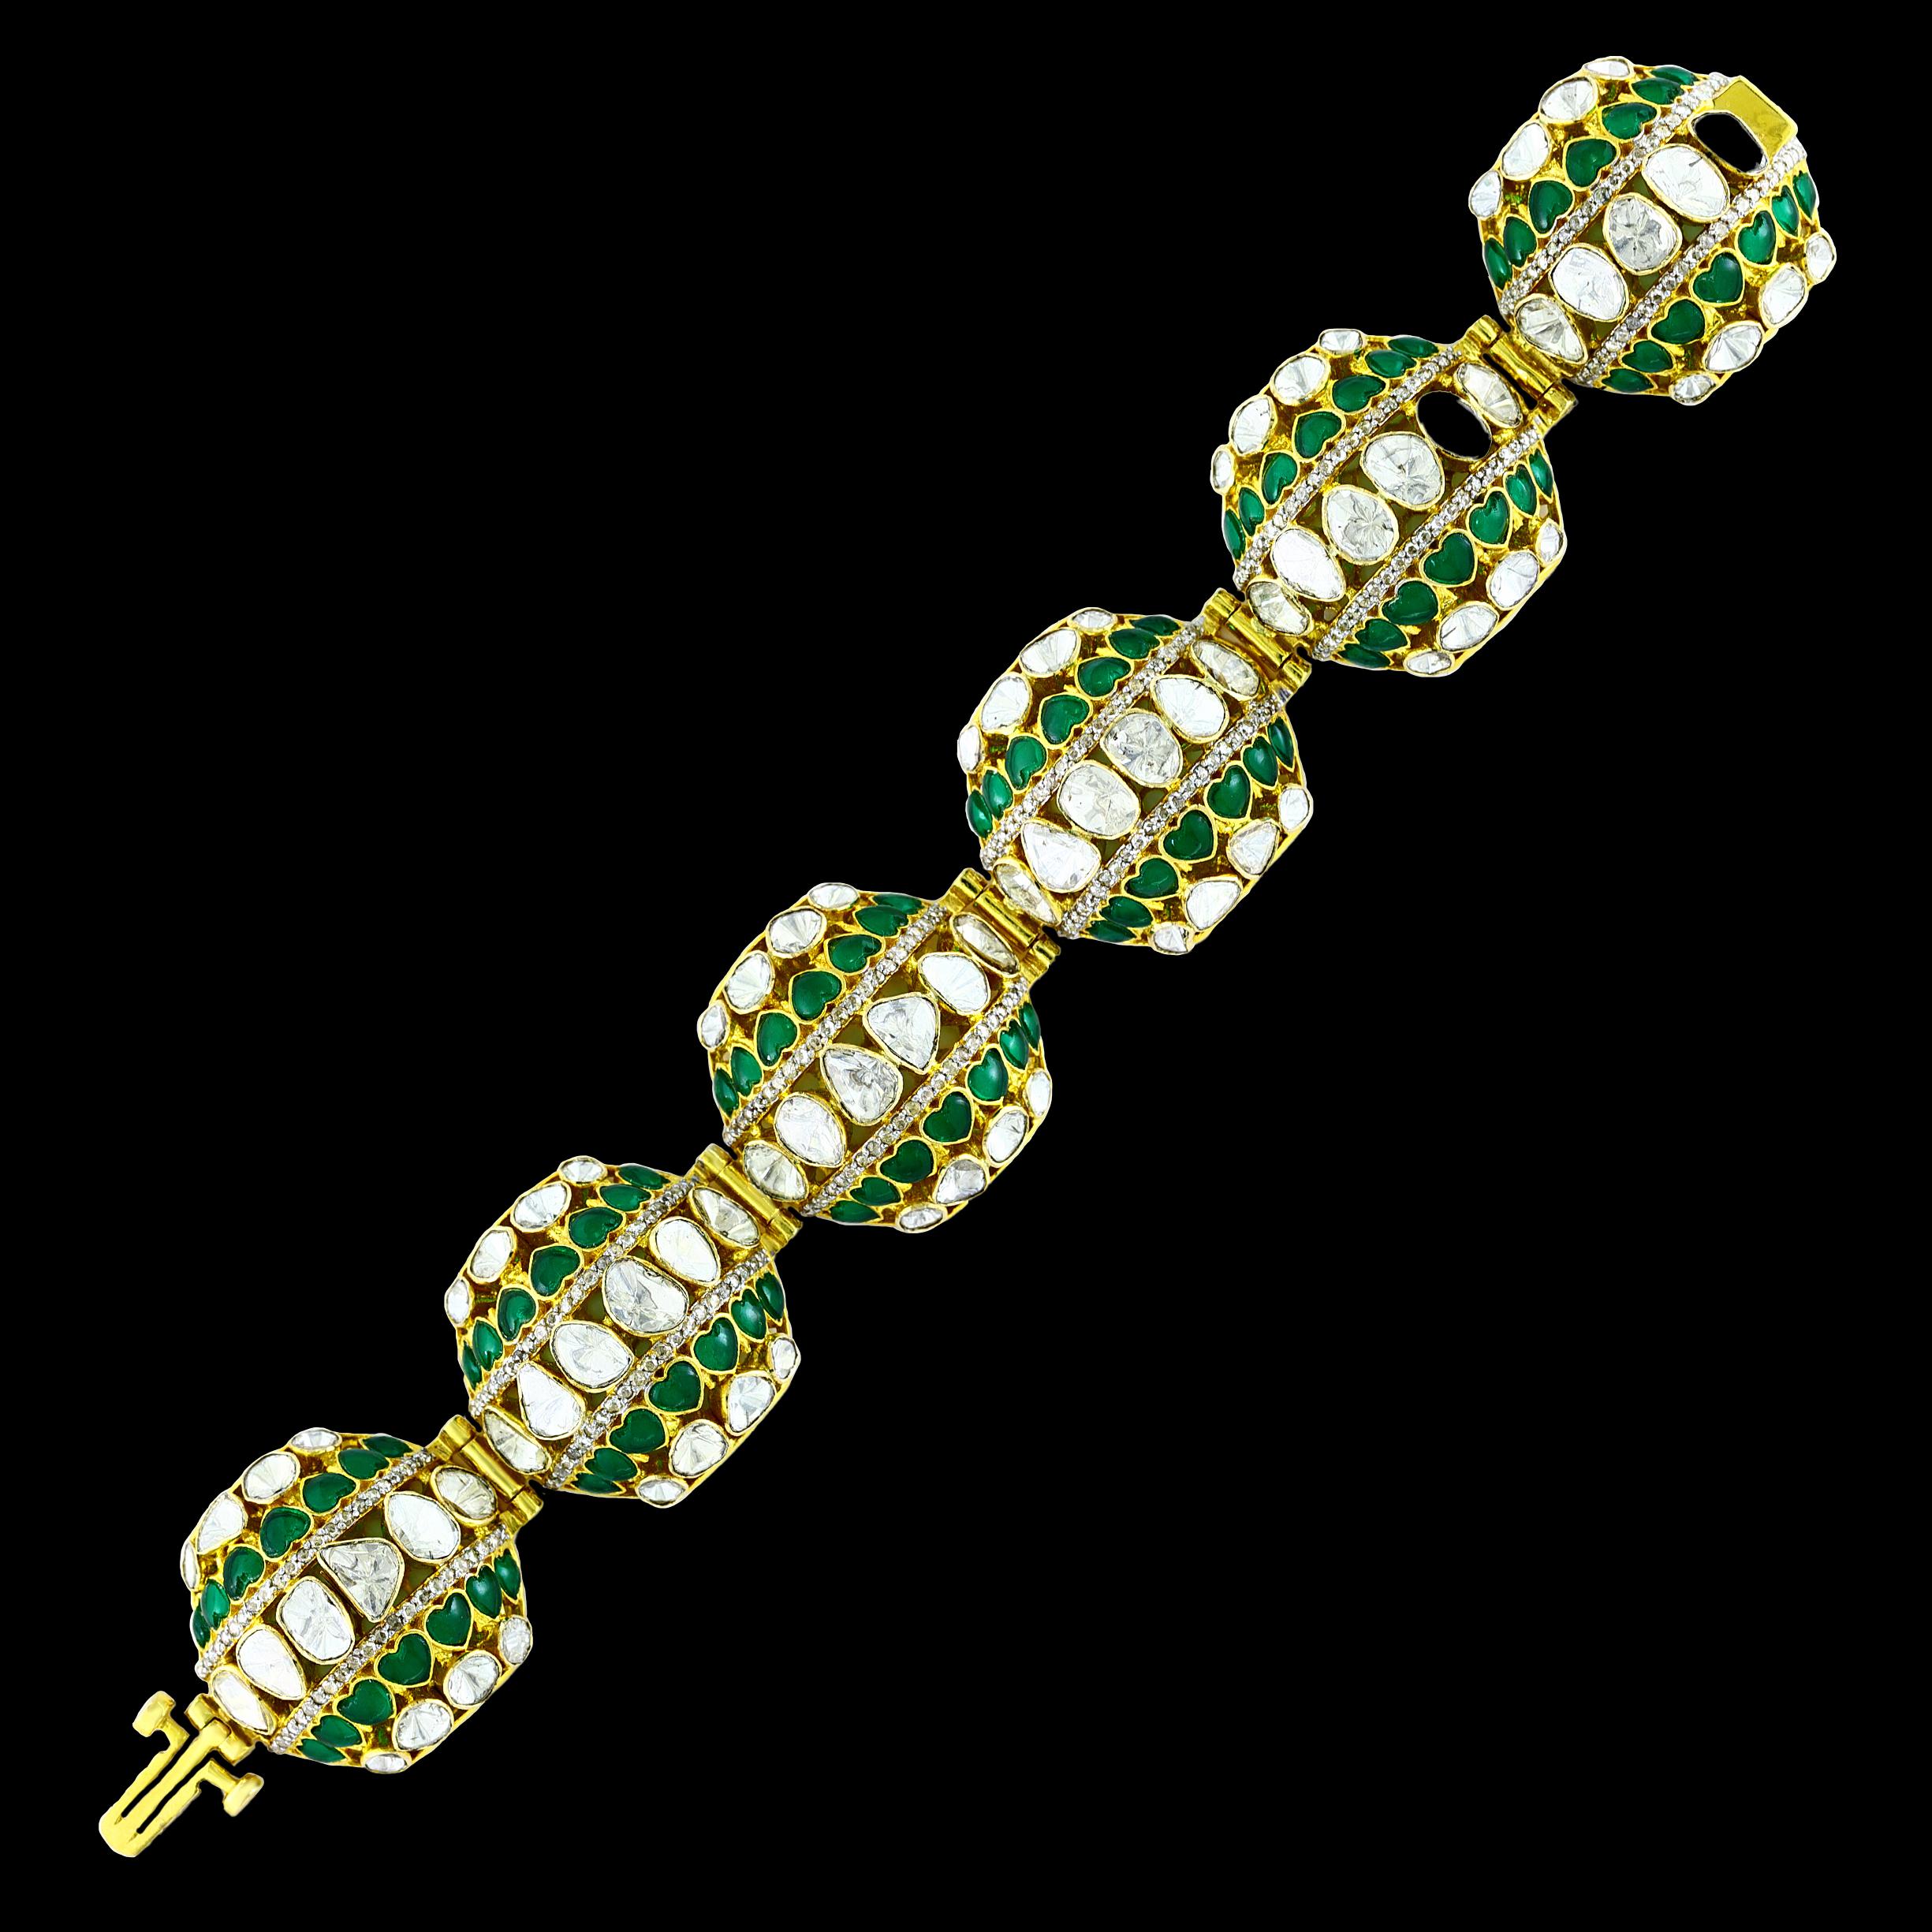 12 Carat Diamond Polki Bangle /Bracelet in 18 Karat Yellow Gold 58 Grams 3